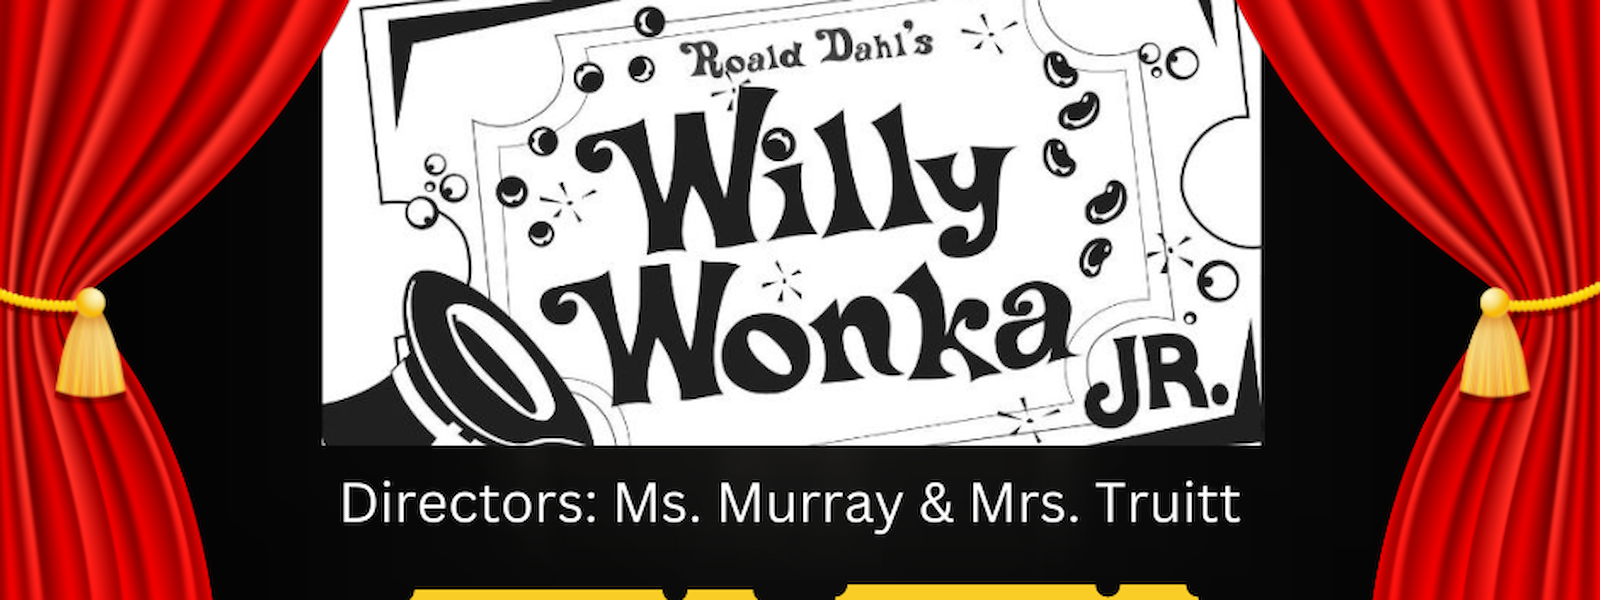 Willy Wonka, Jr.